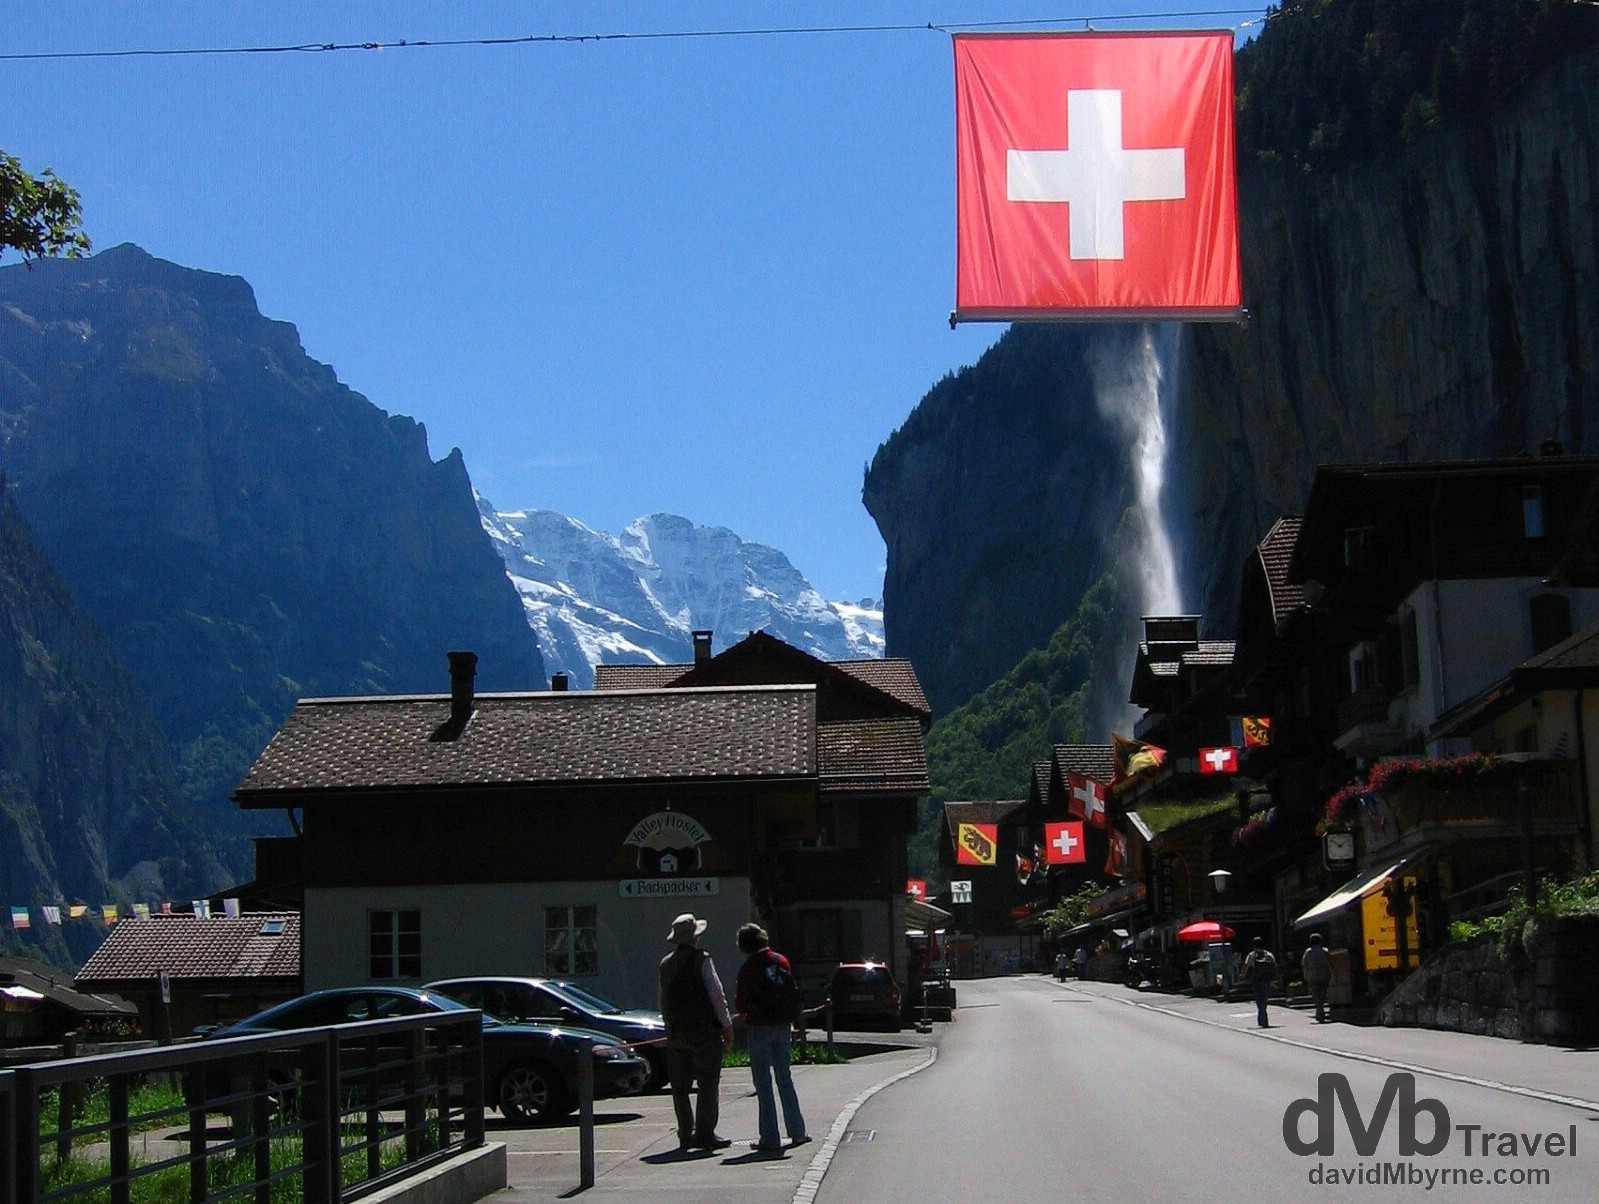 Entering the village of Lauterbrunnen, Jungfrau region, Switzerland. August 24th, 2007. 